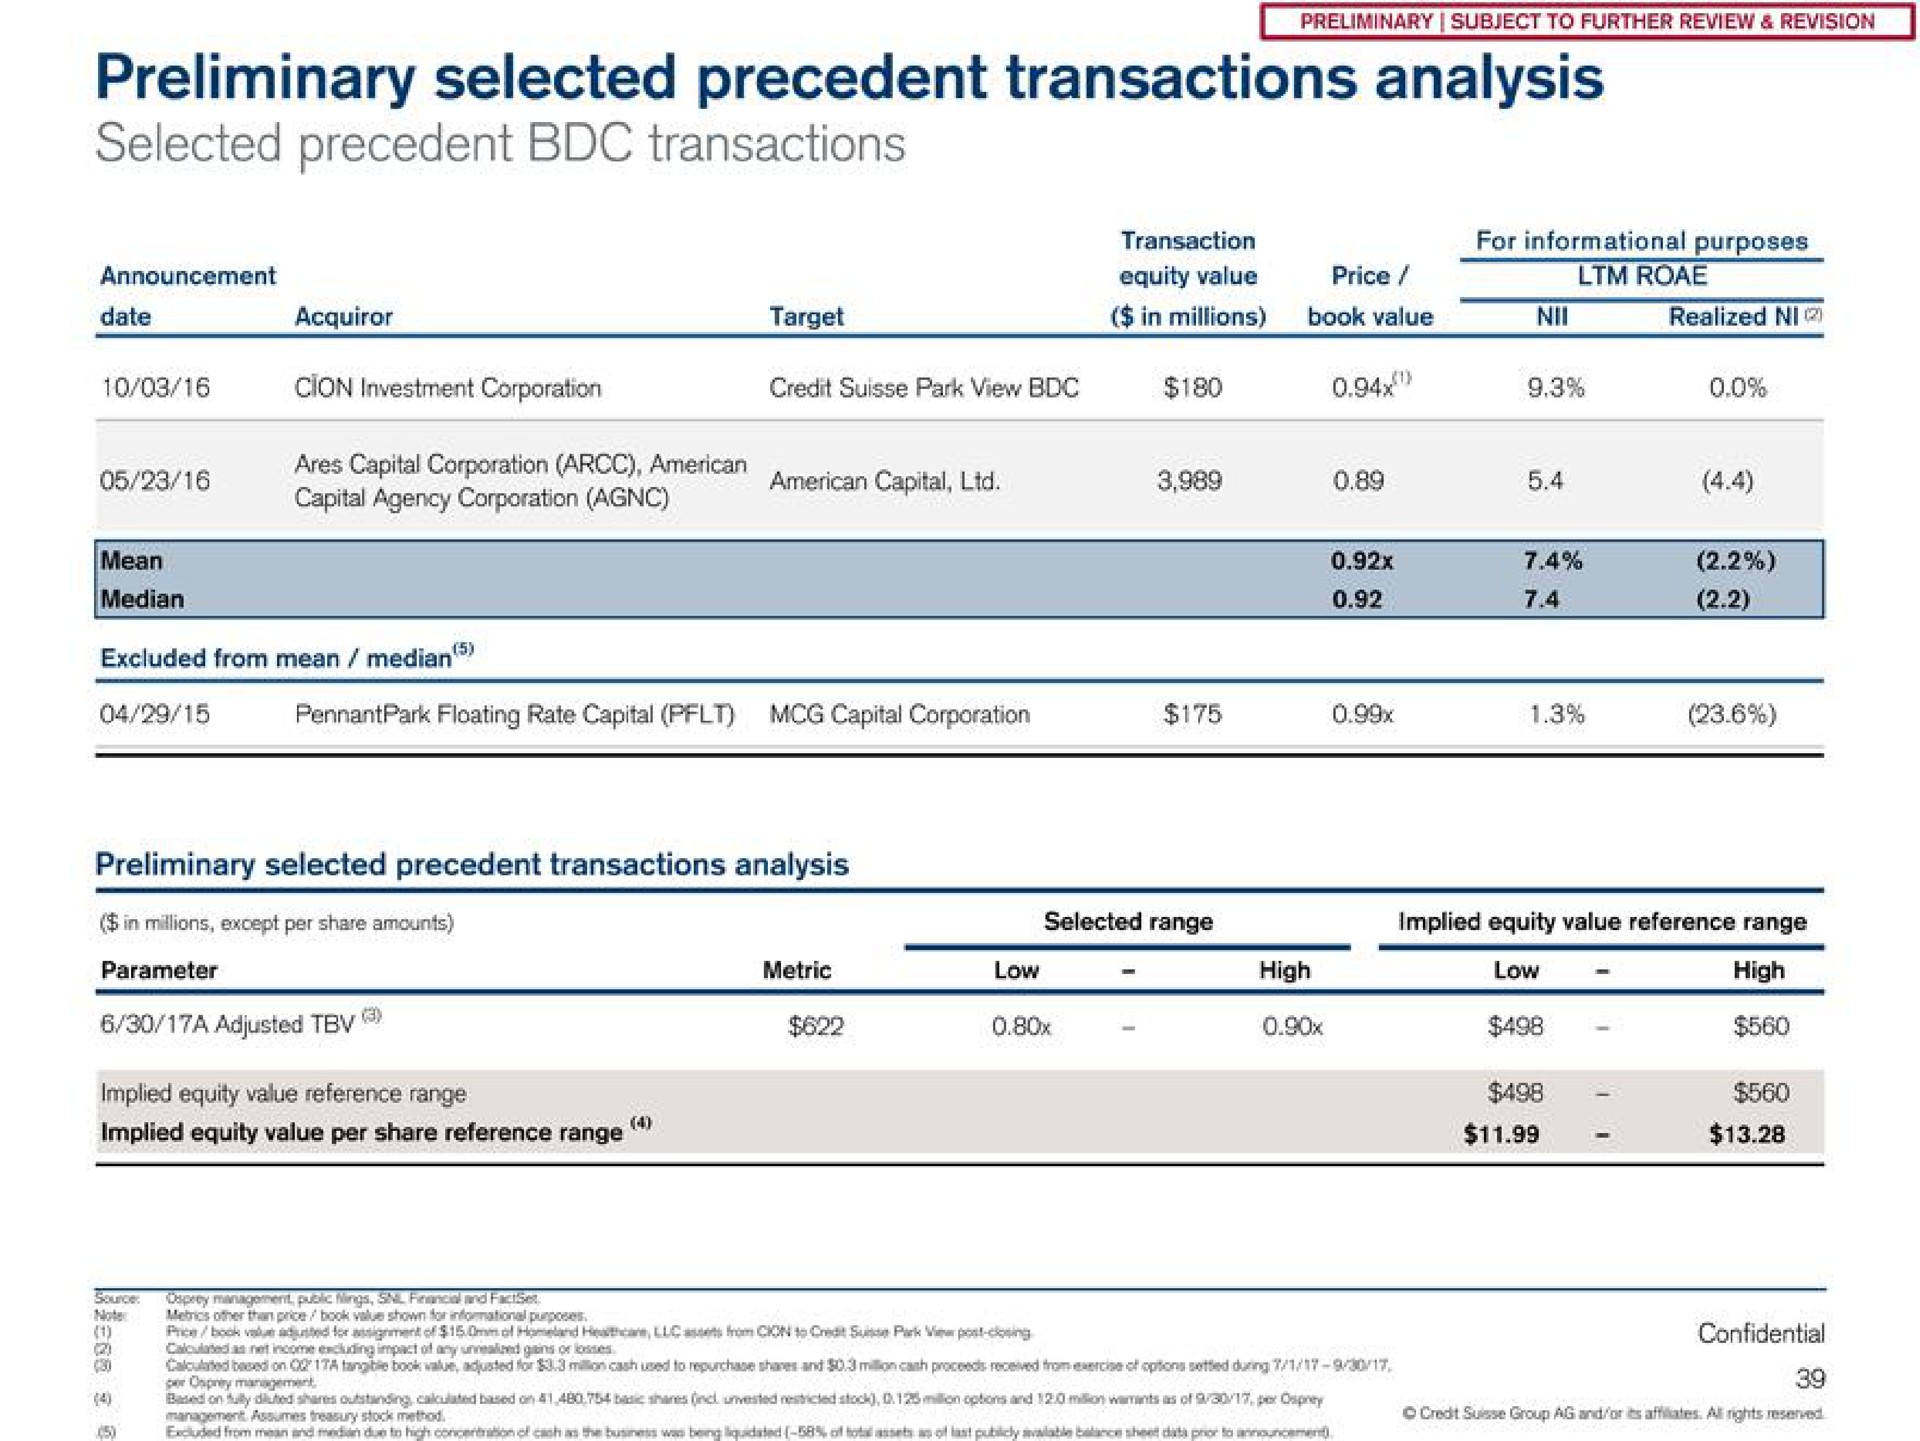 preliminary selected precedent transactions analysis selected precedent transactions | Credit Suisse